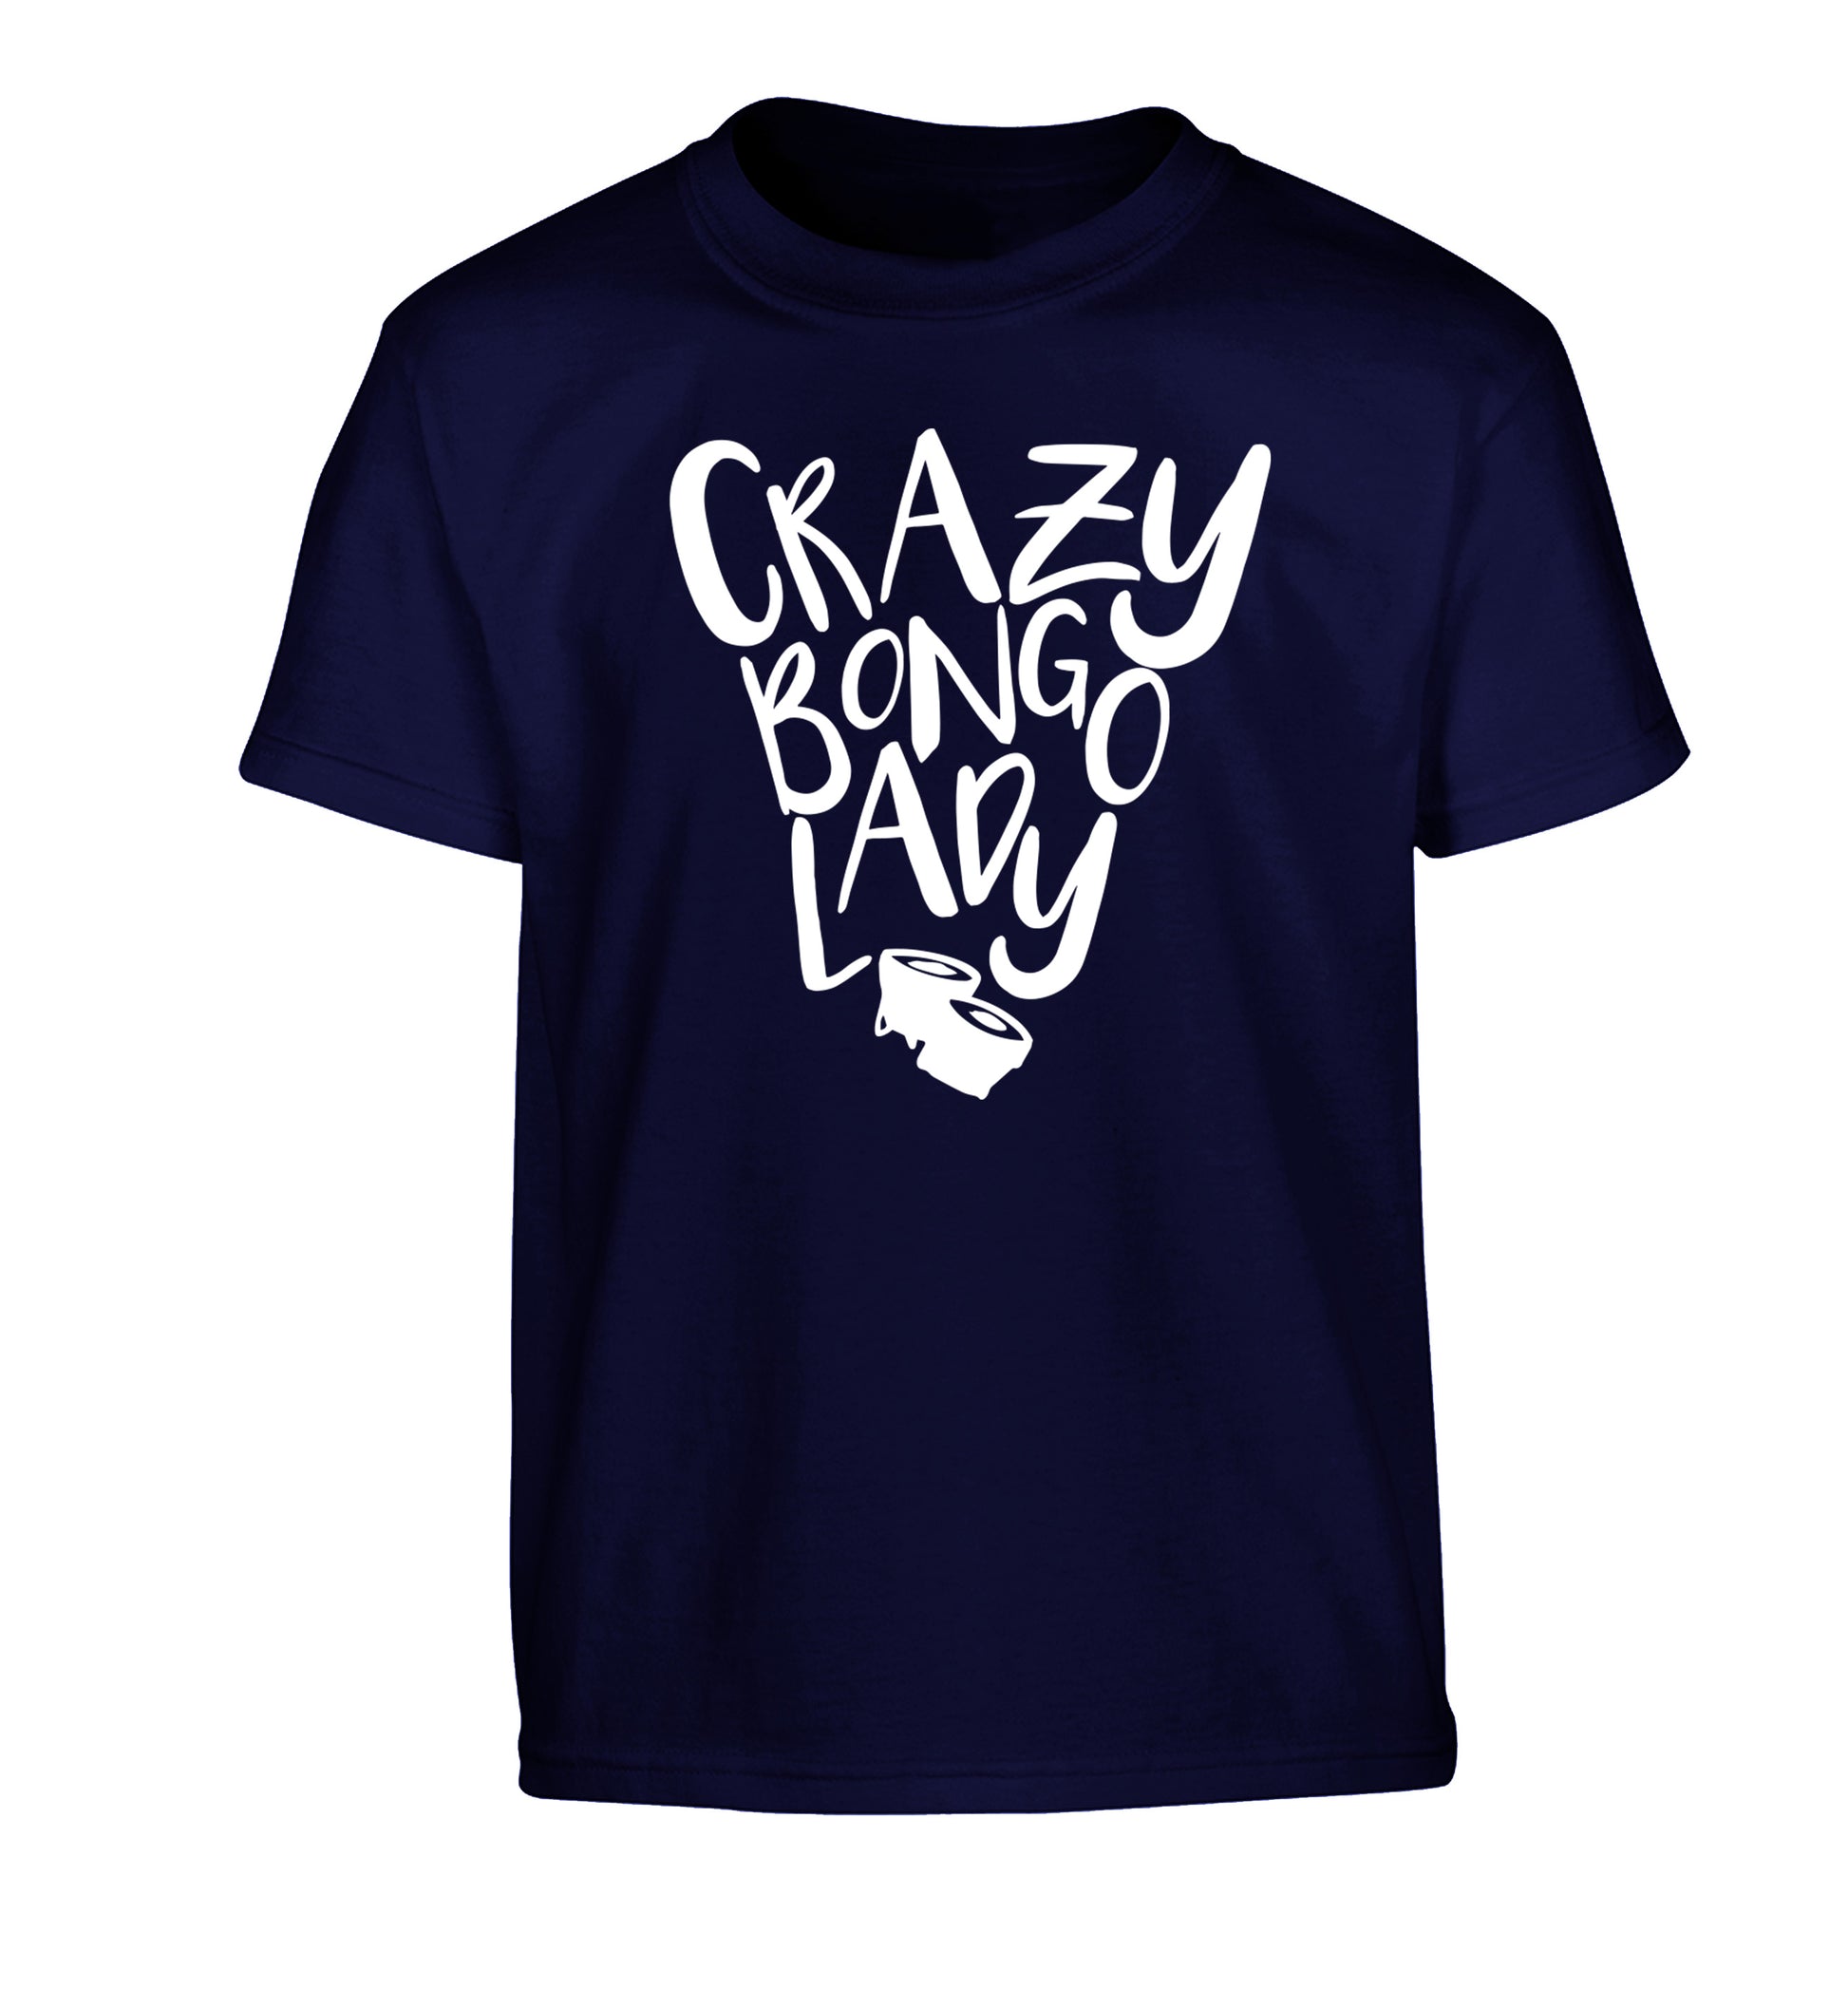 Crazy bongo lady Children's navy Tshirt 12-14 Years